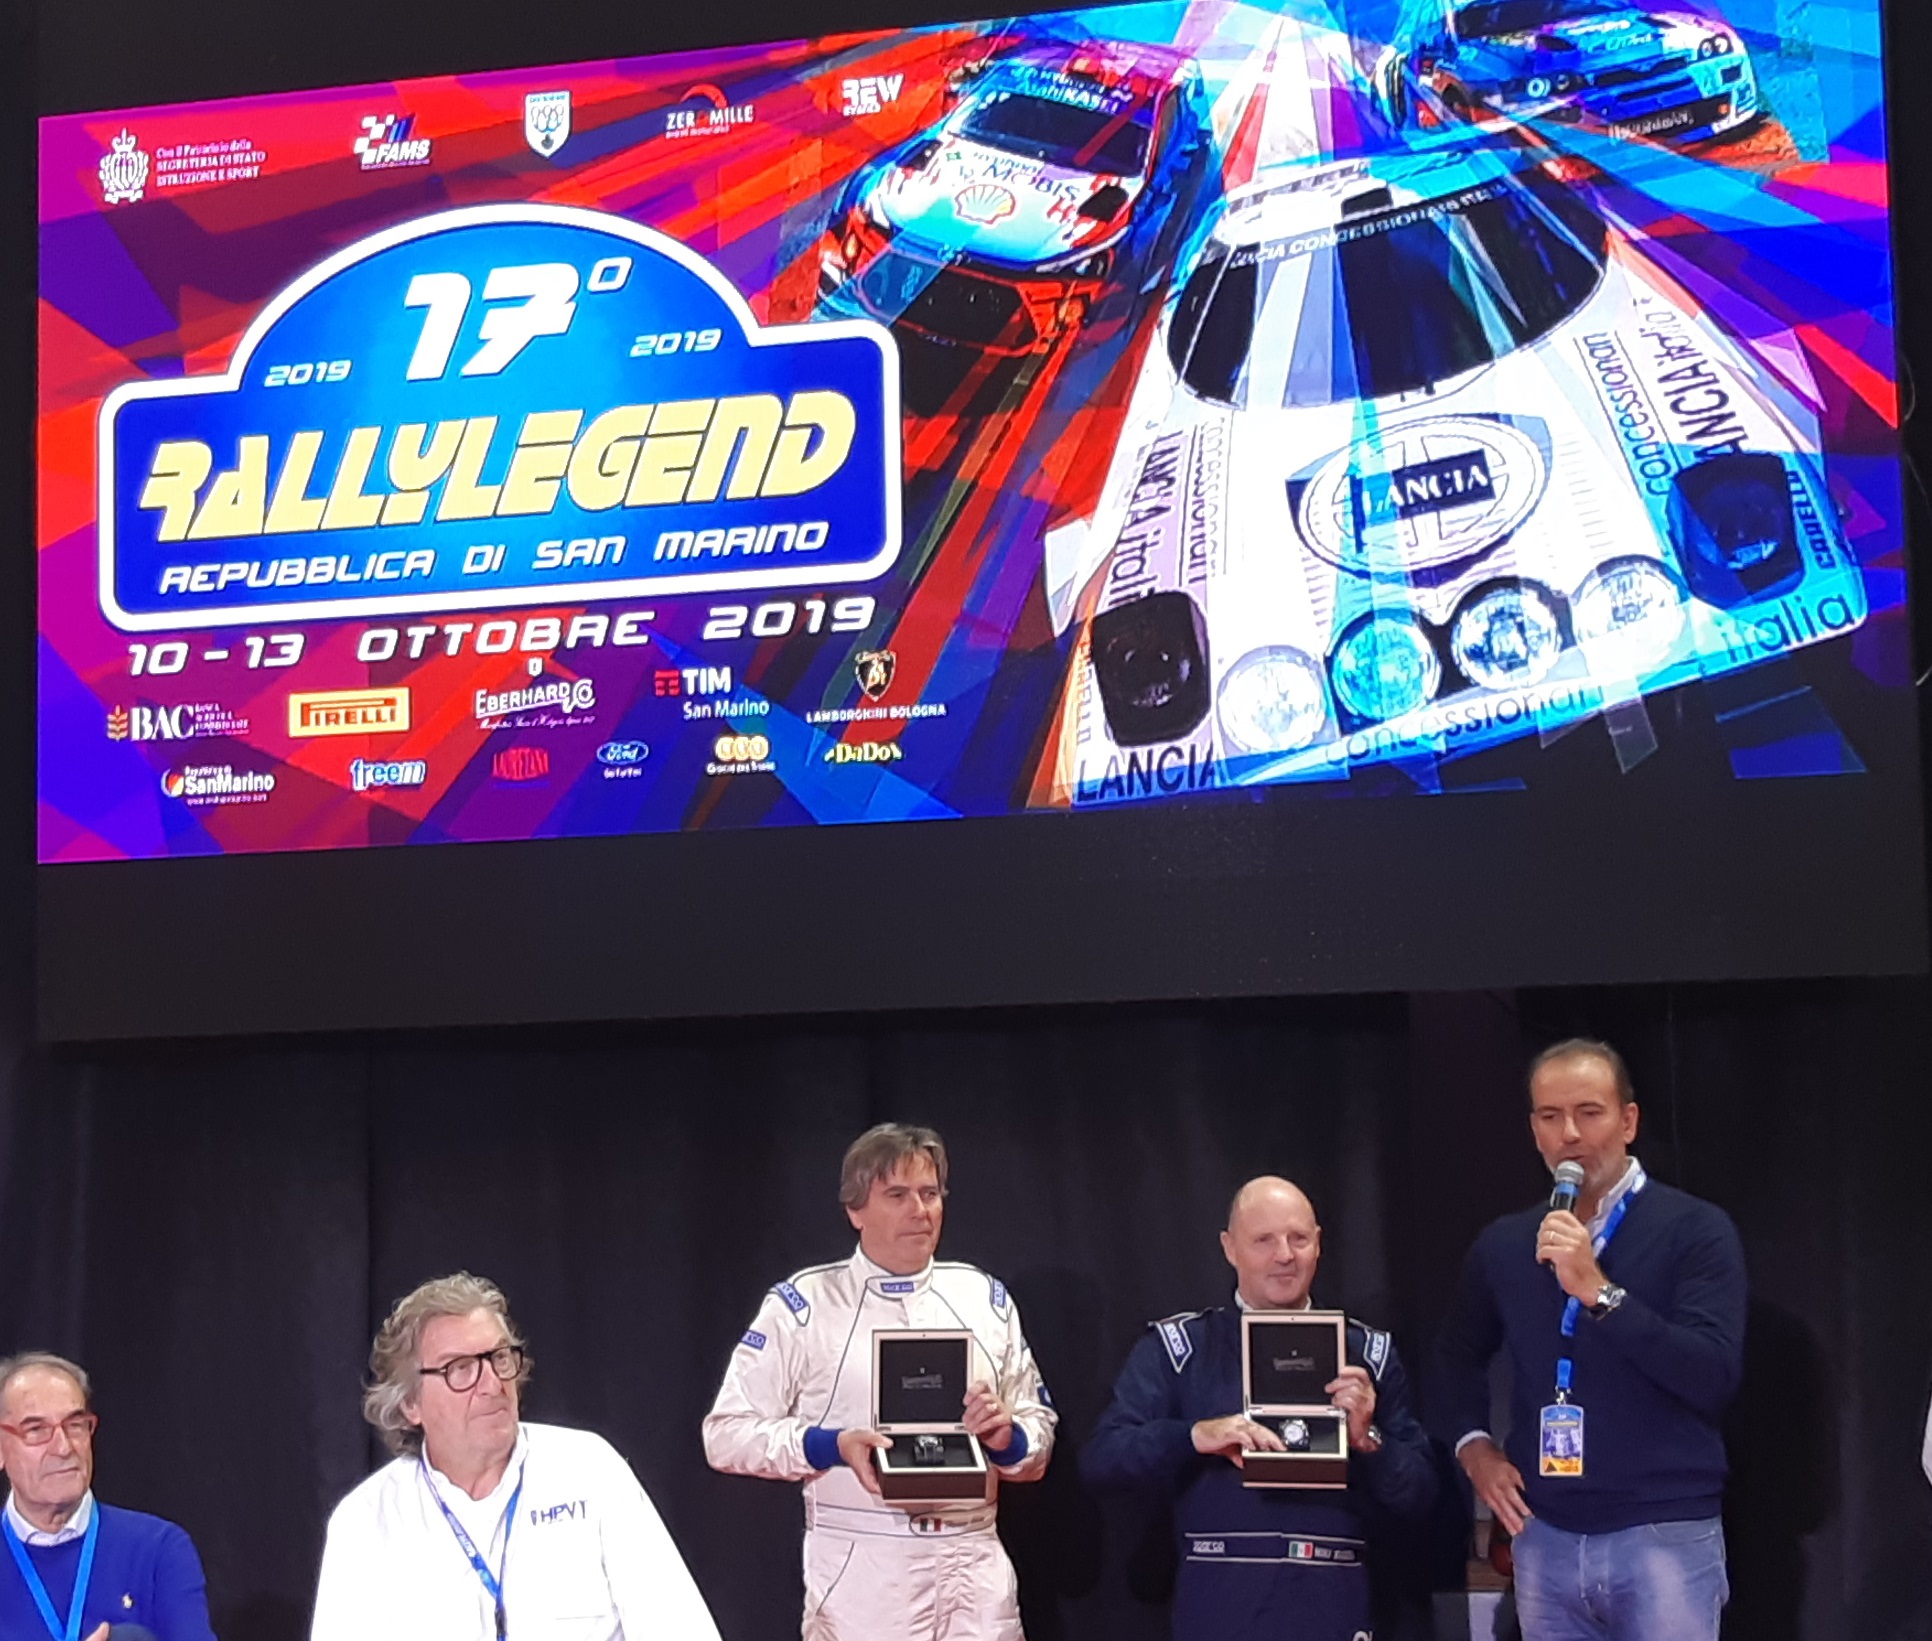 Eberhard & Co_Rallylegend 2019